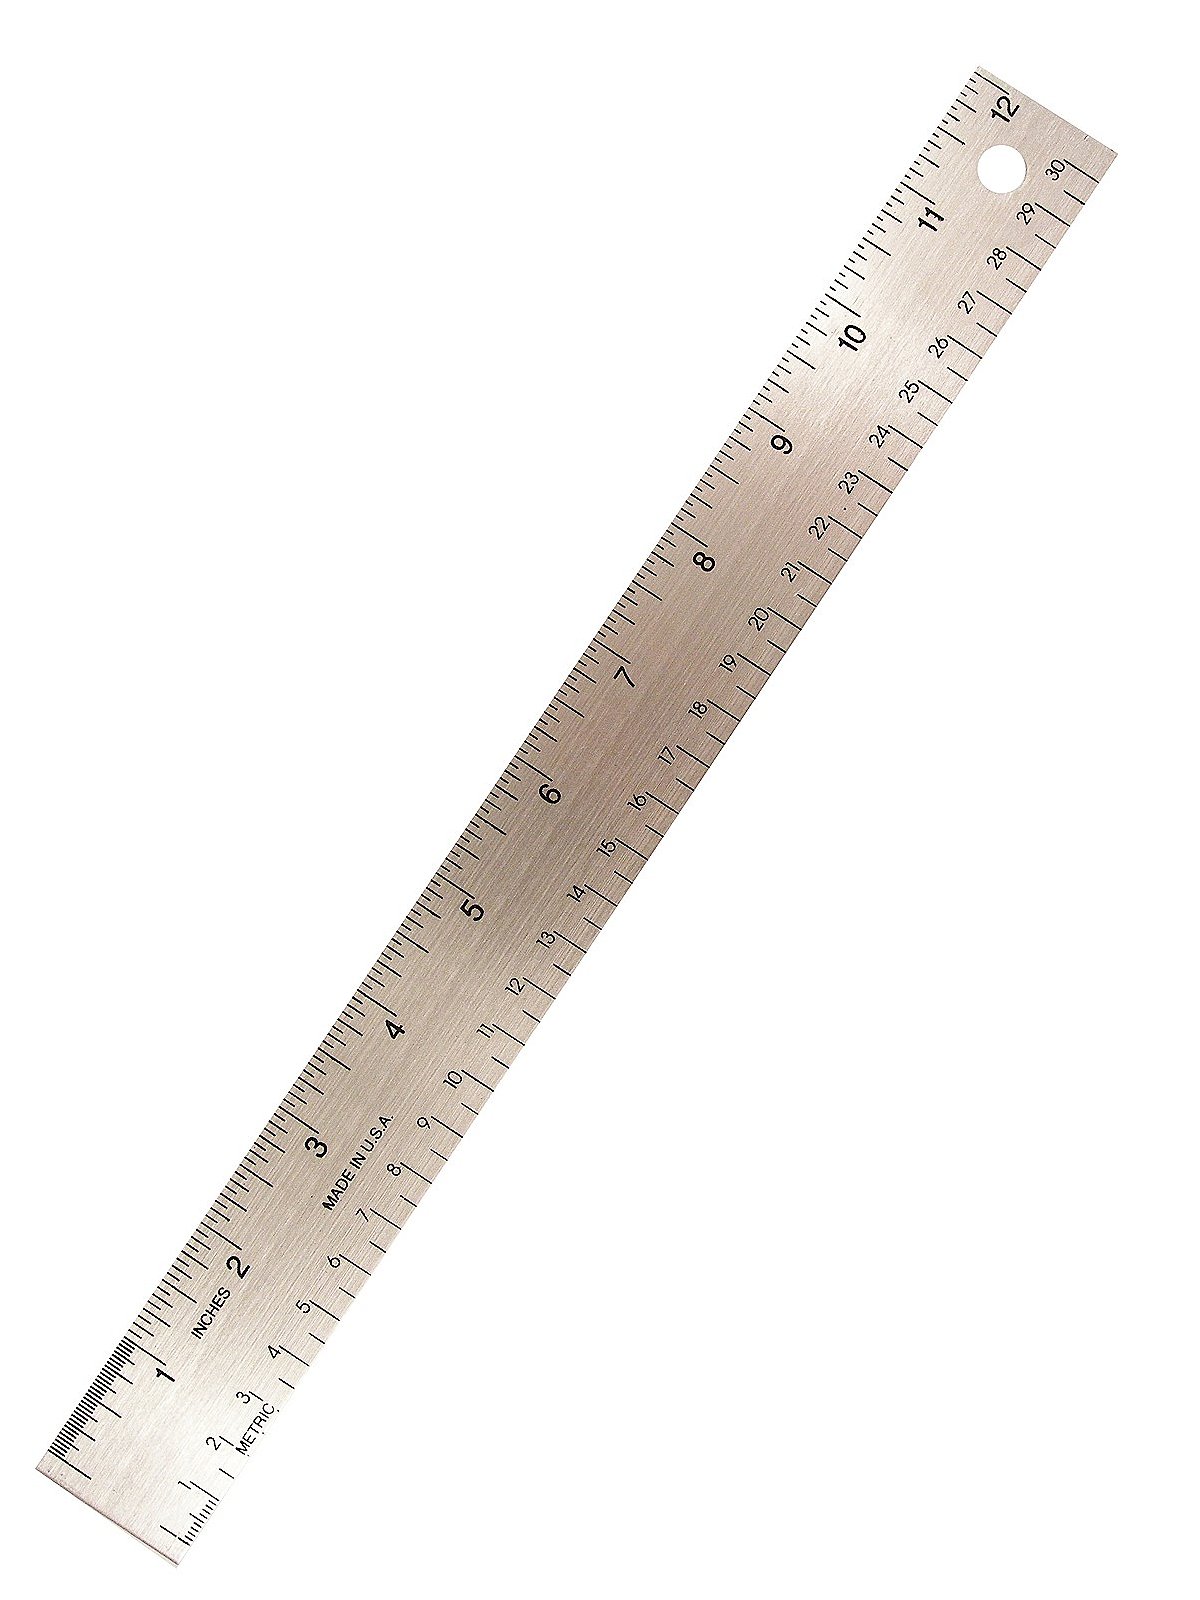 Ludwig Precision 36 Center-Finding Aluminum Straight Edge, 81236